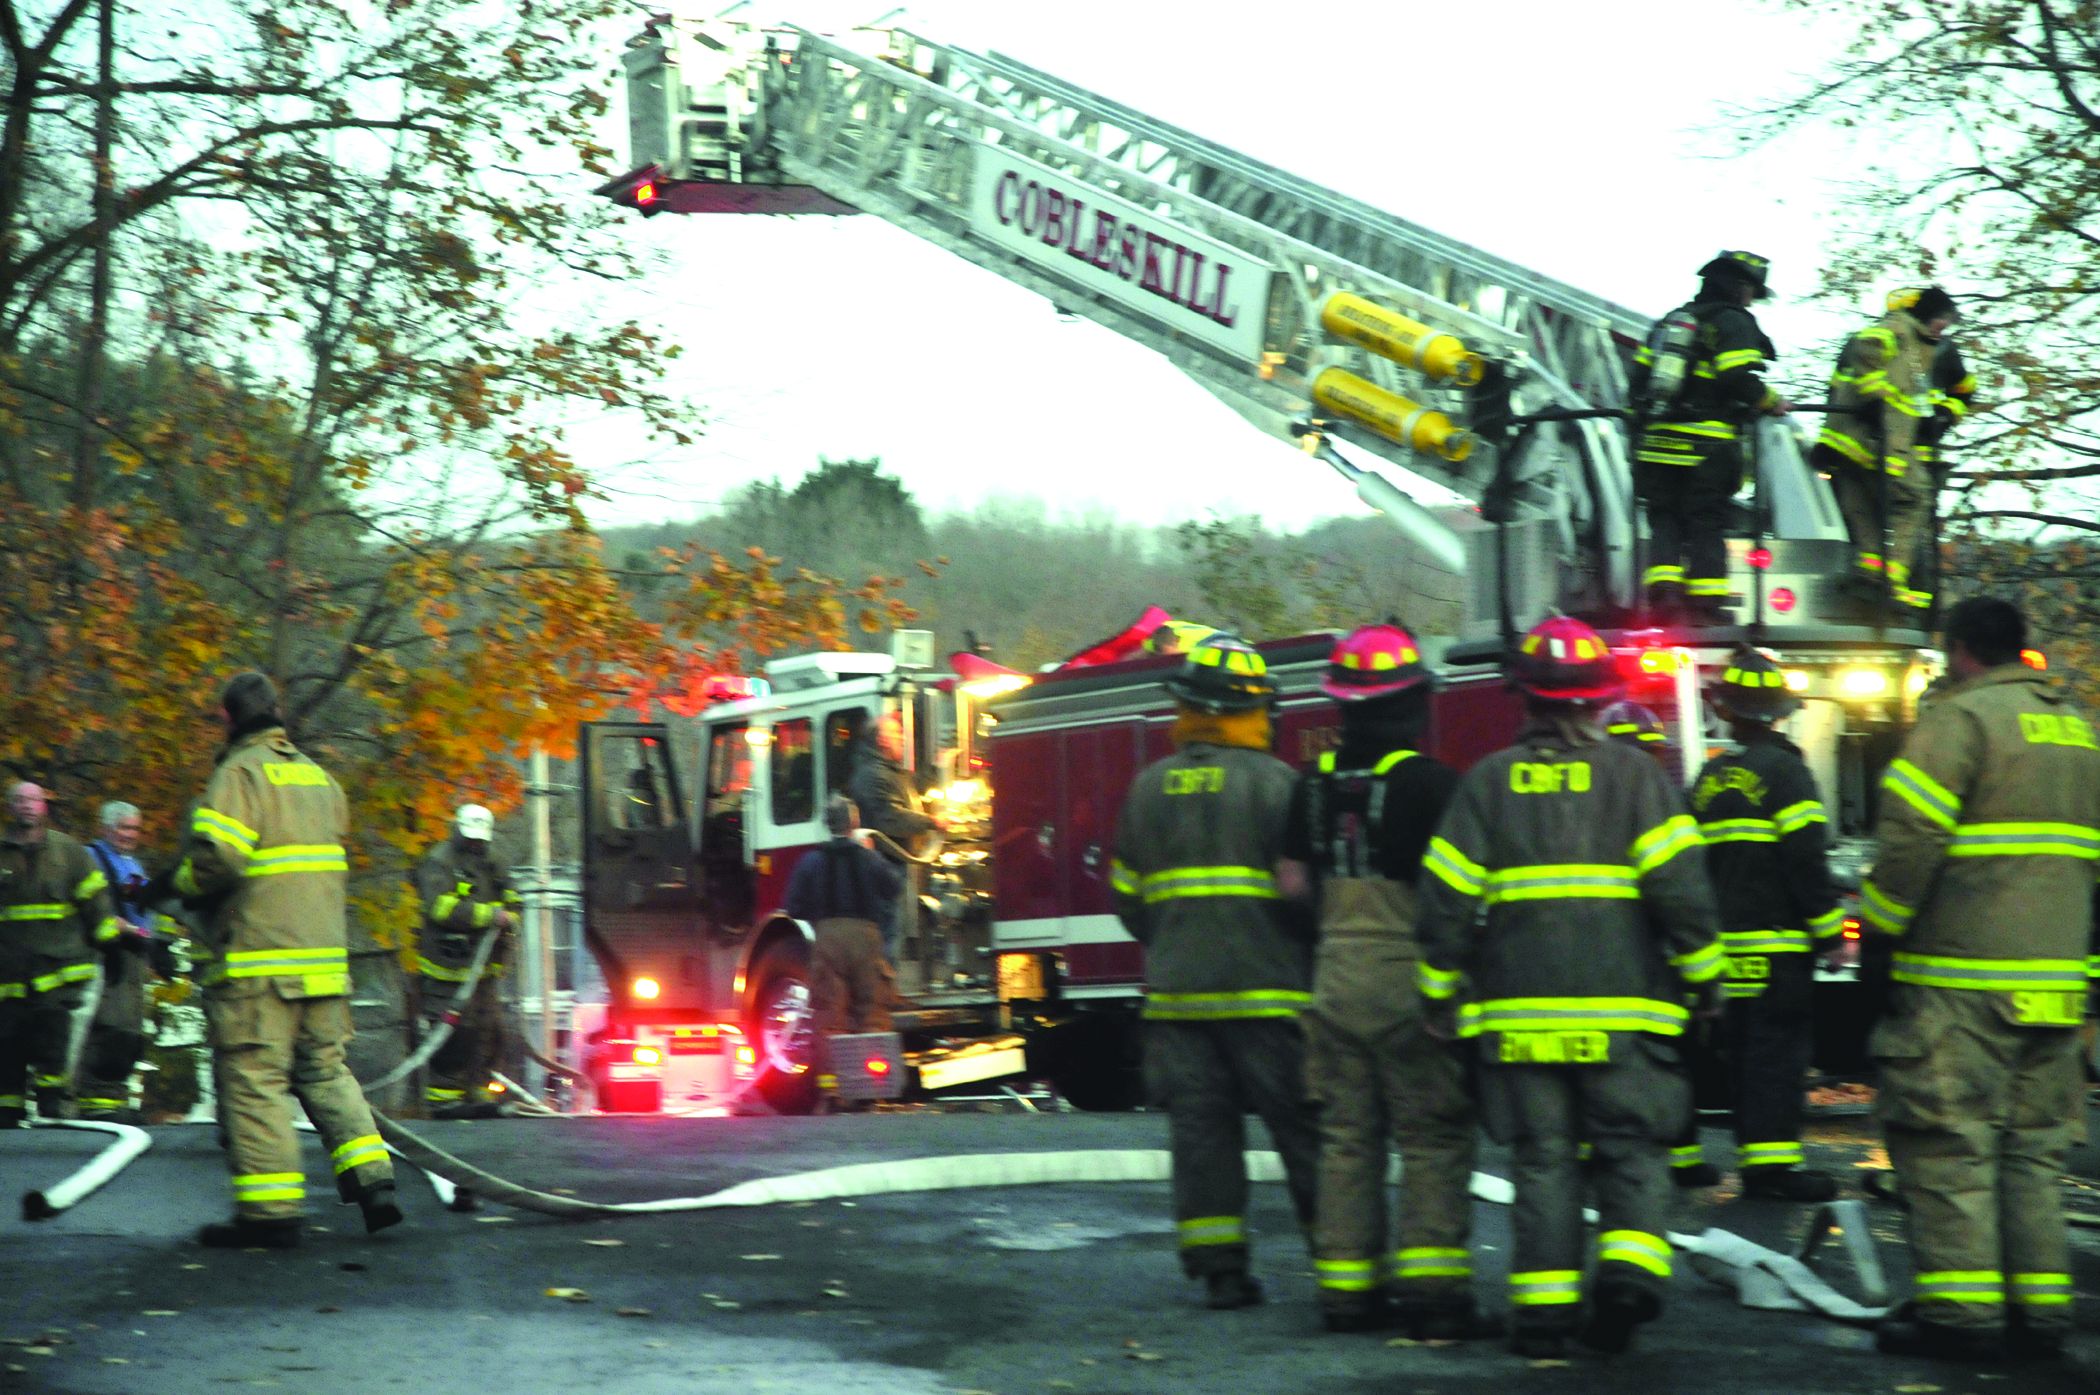 Fire hits Cobleskill